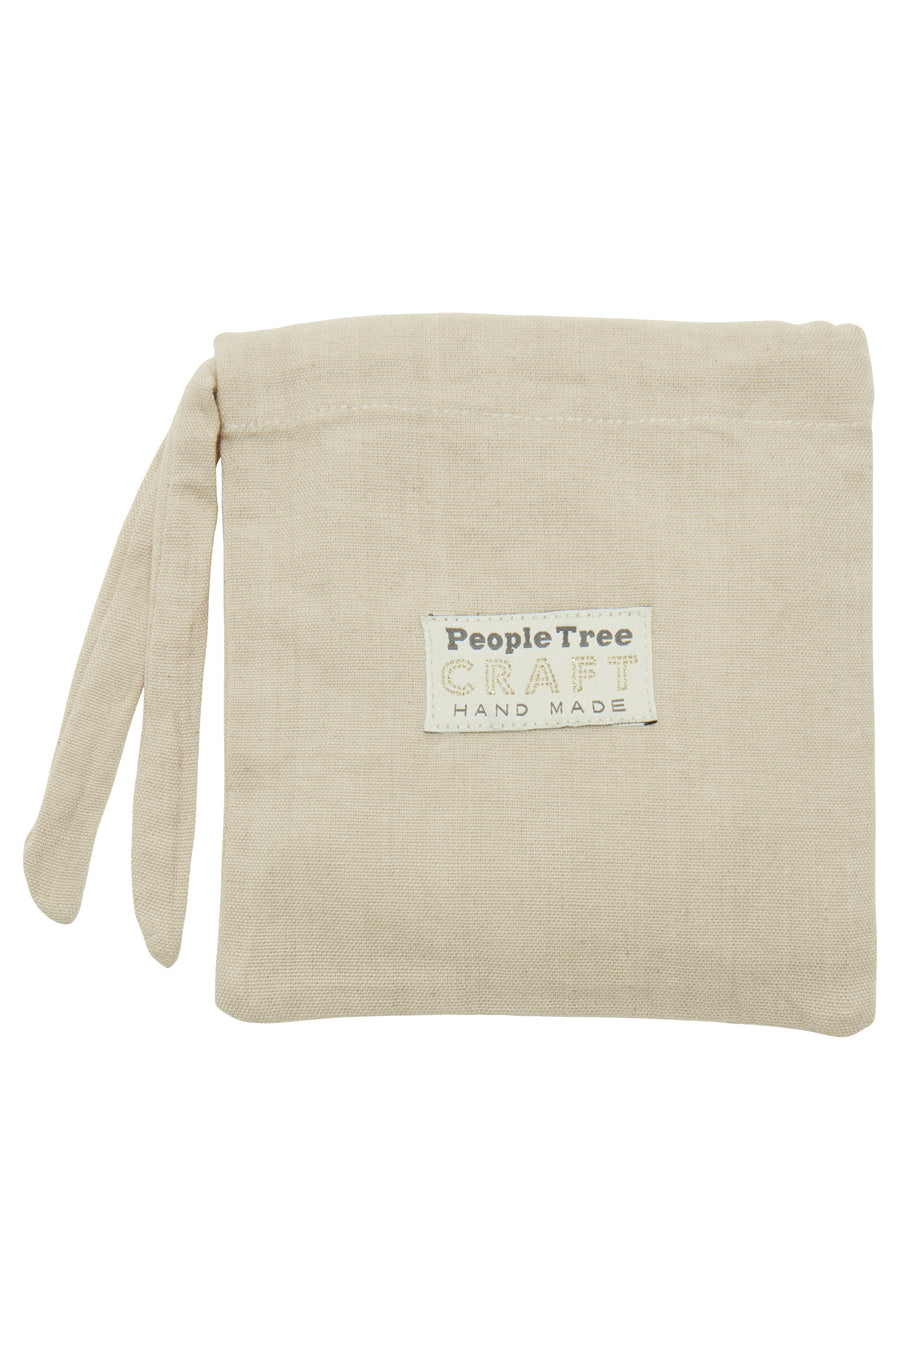 Sac à bijoux / pochette en recyclage People Tree Tissus